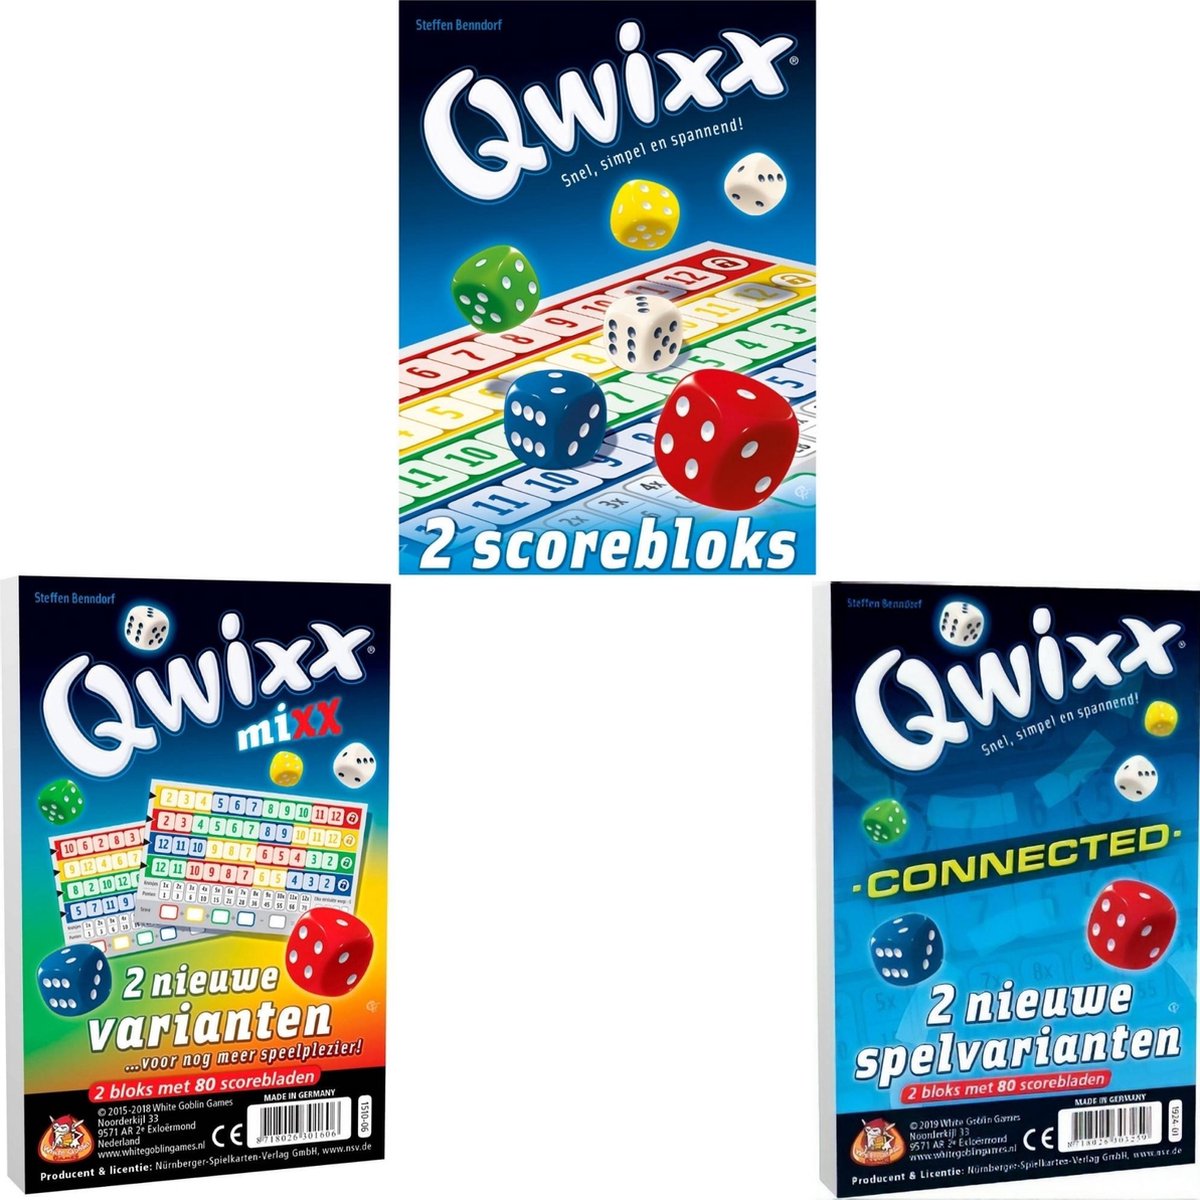 Spellenbundel - 3 stuks - Dobbelspel - Qwixx scoreblocks & Qwixx Mixx & Qwixx Connected